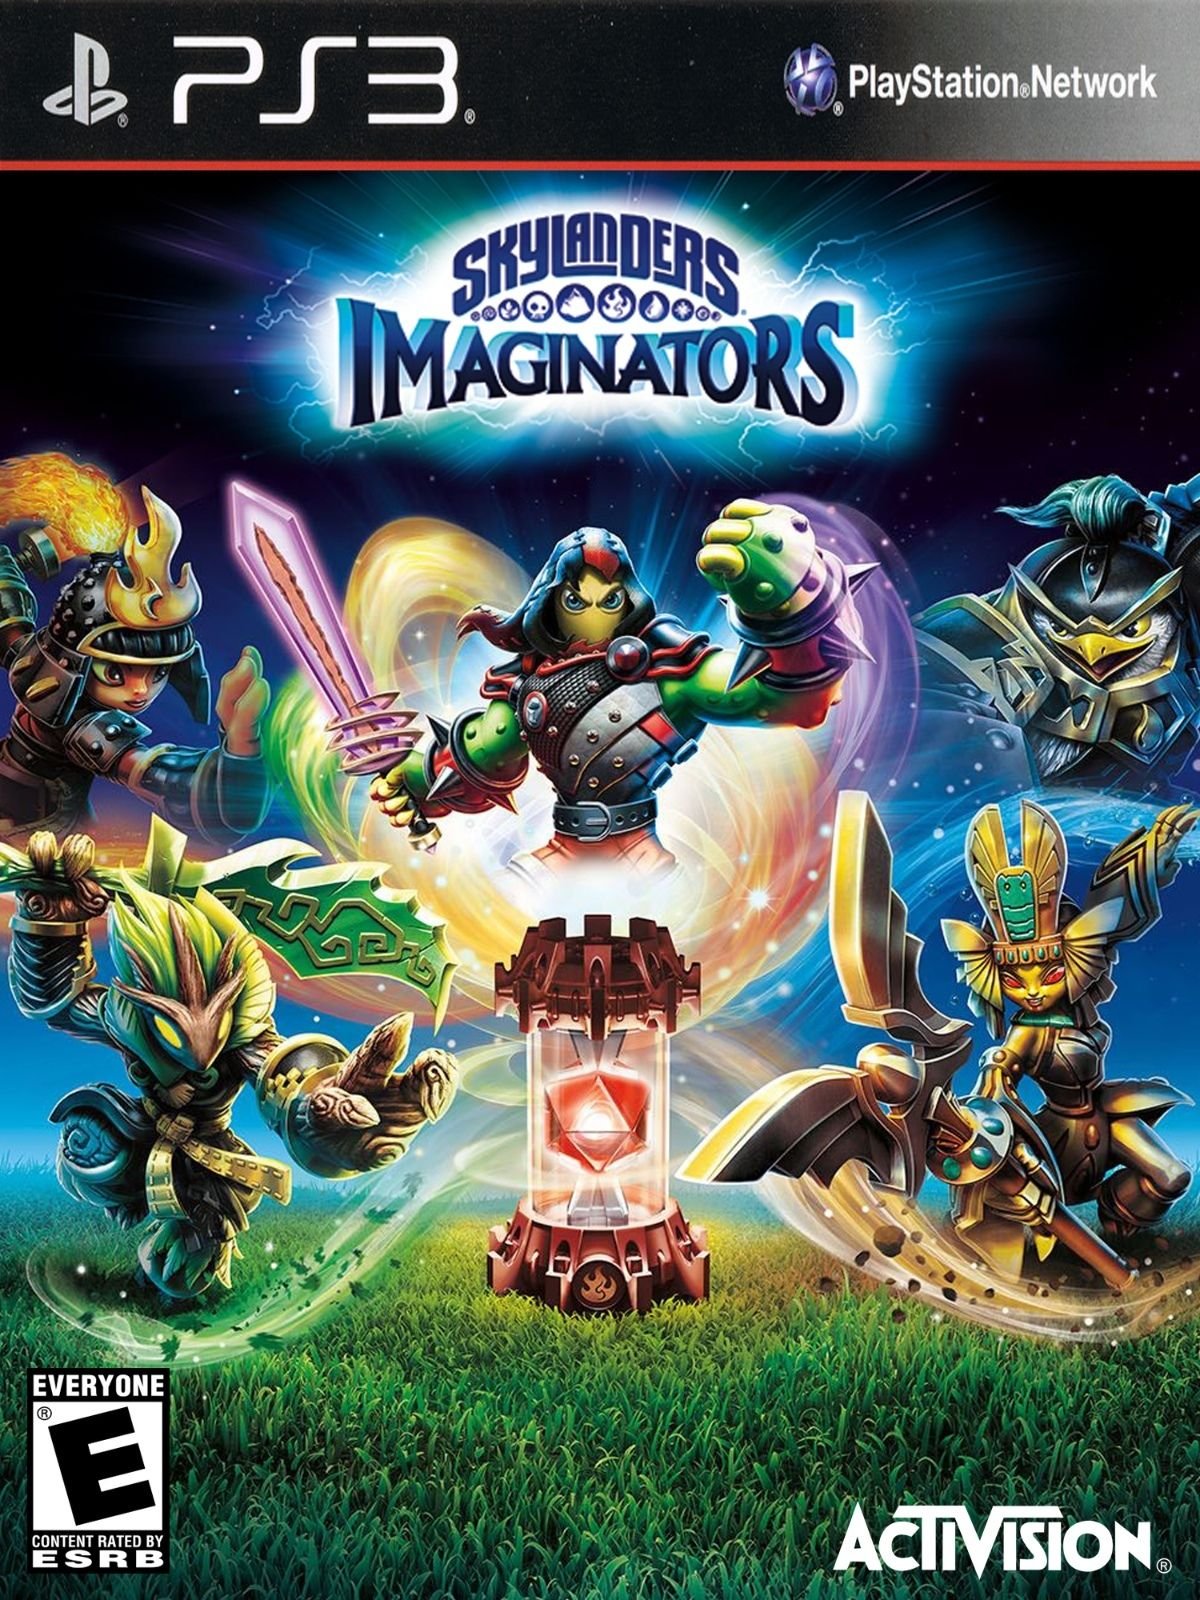 Skylanders Imaginators Standalone Game Only for PS3